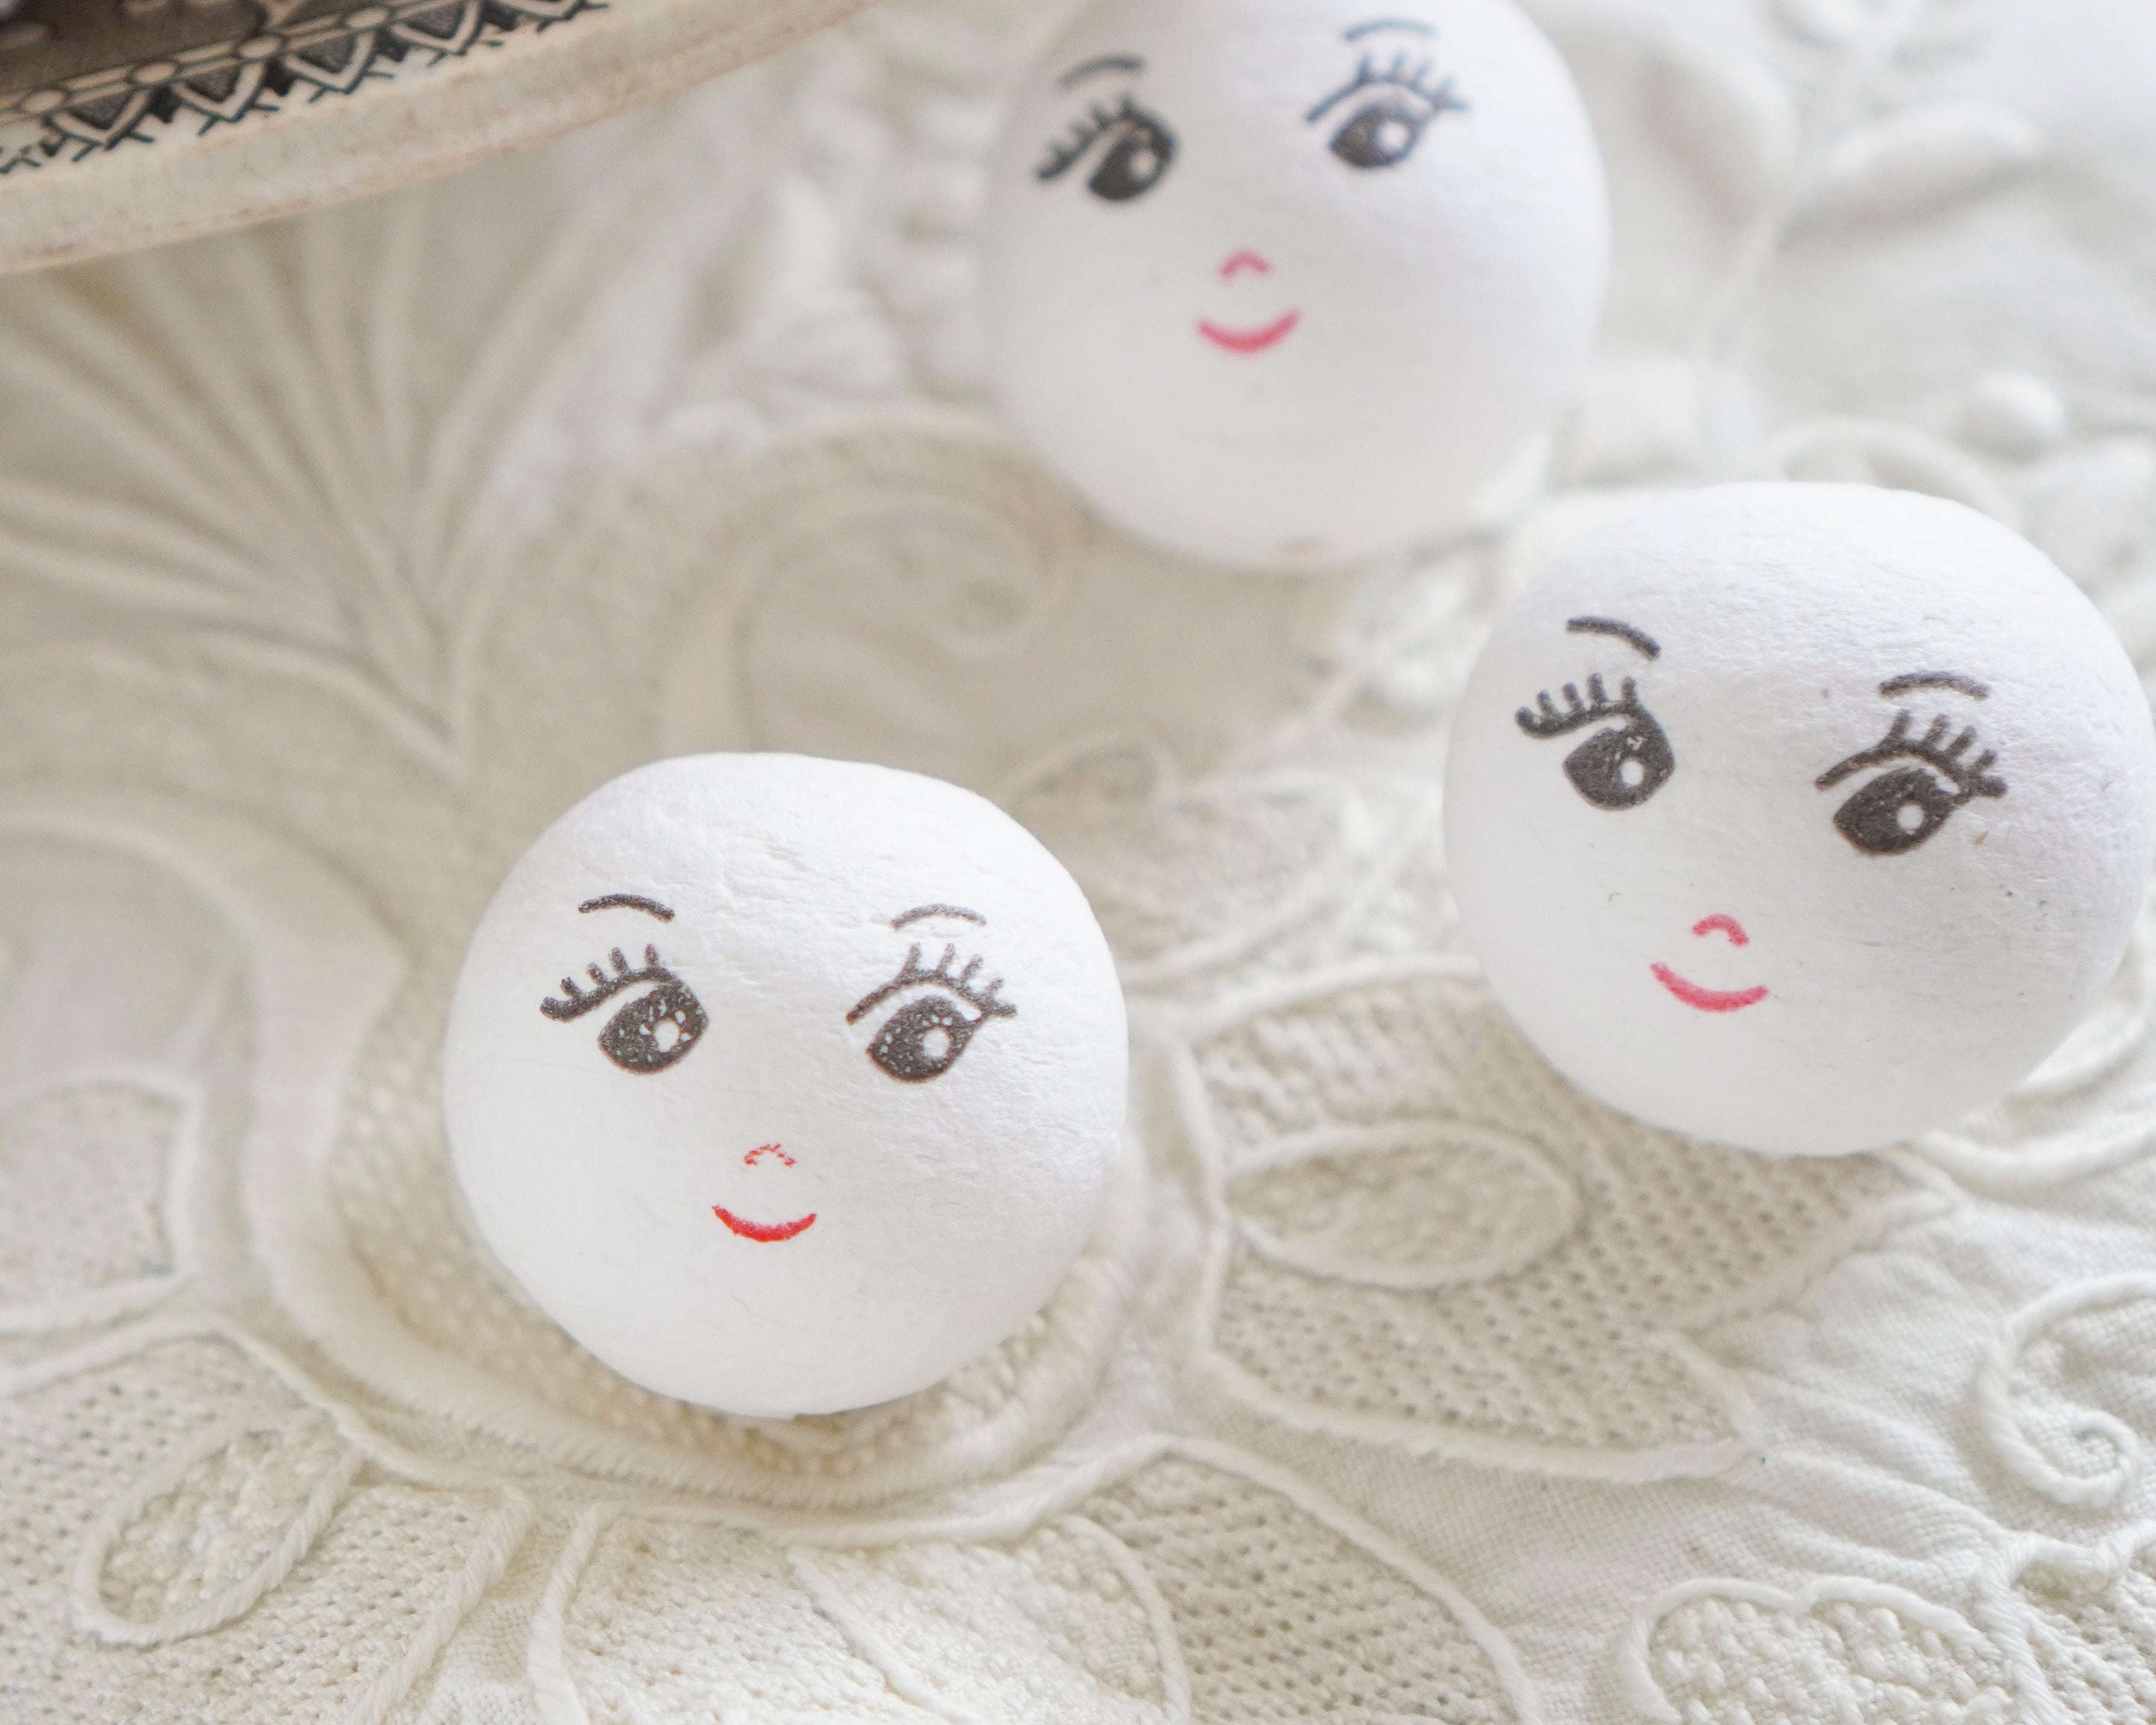 Spun Cotton Heads: CHARM - 30mm Vintage-Style Cotton Doll Heads with Faces, 12 Pcs.